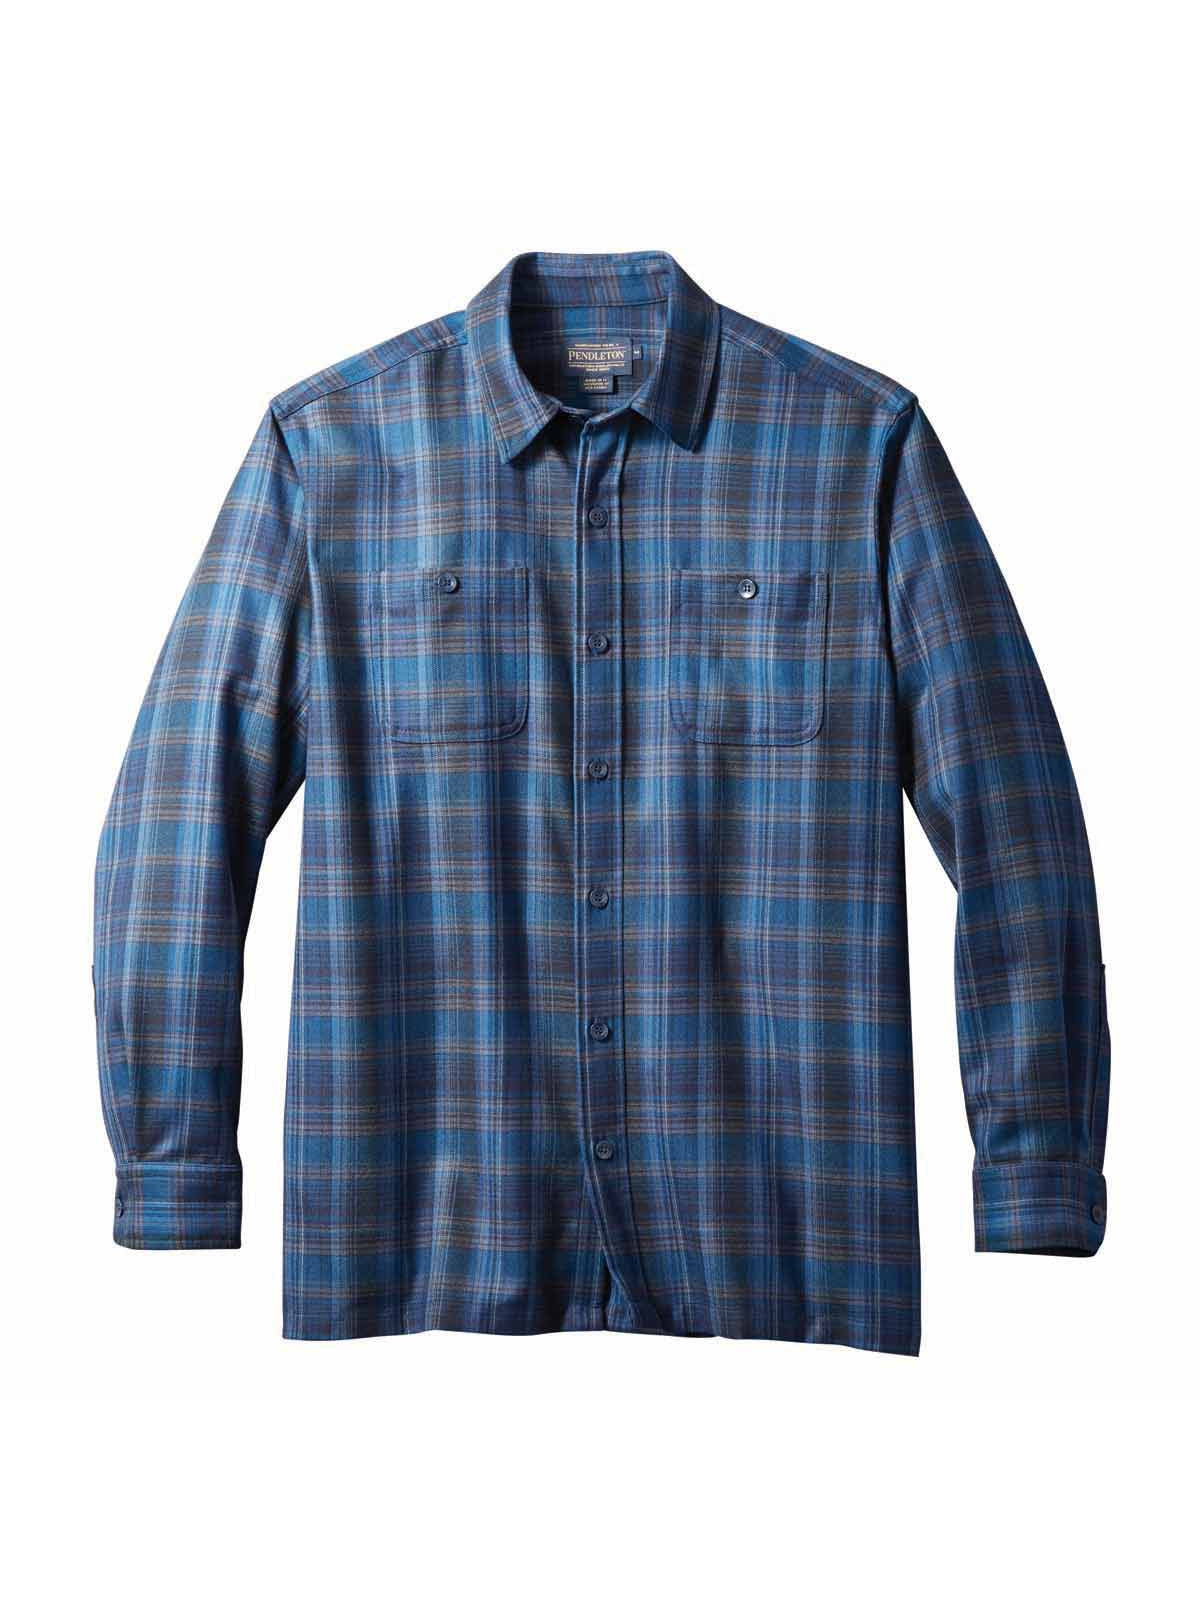 Pendleton Virgin Wool Flannel Shirt in Blue Plaid